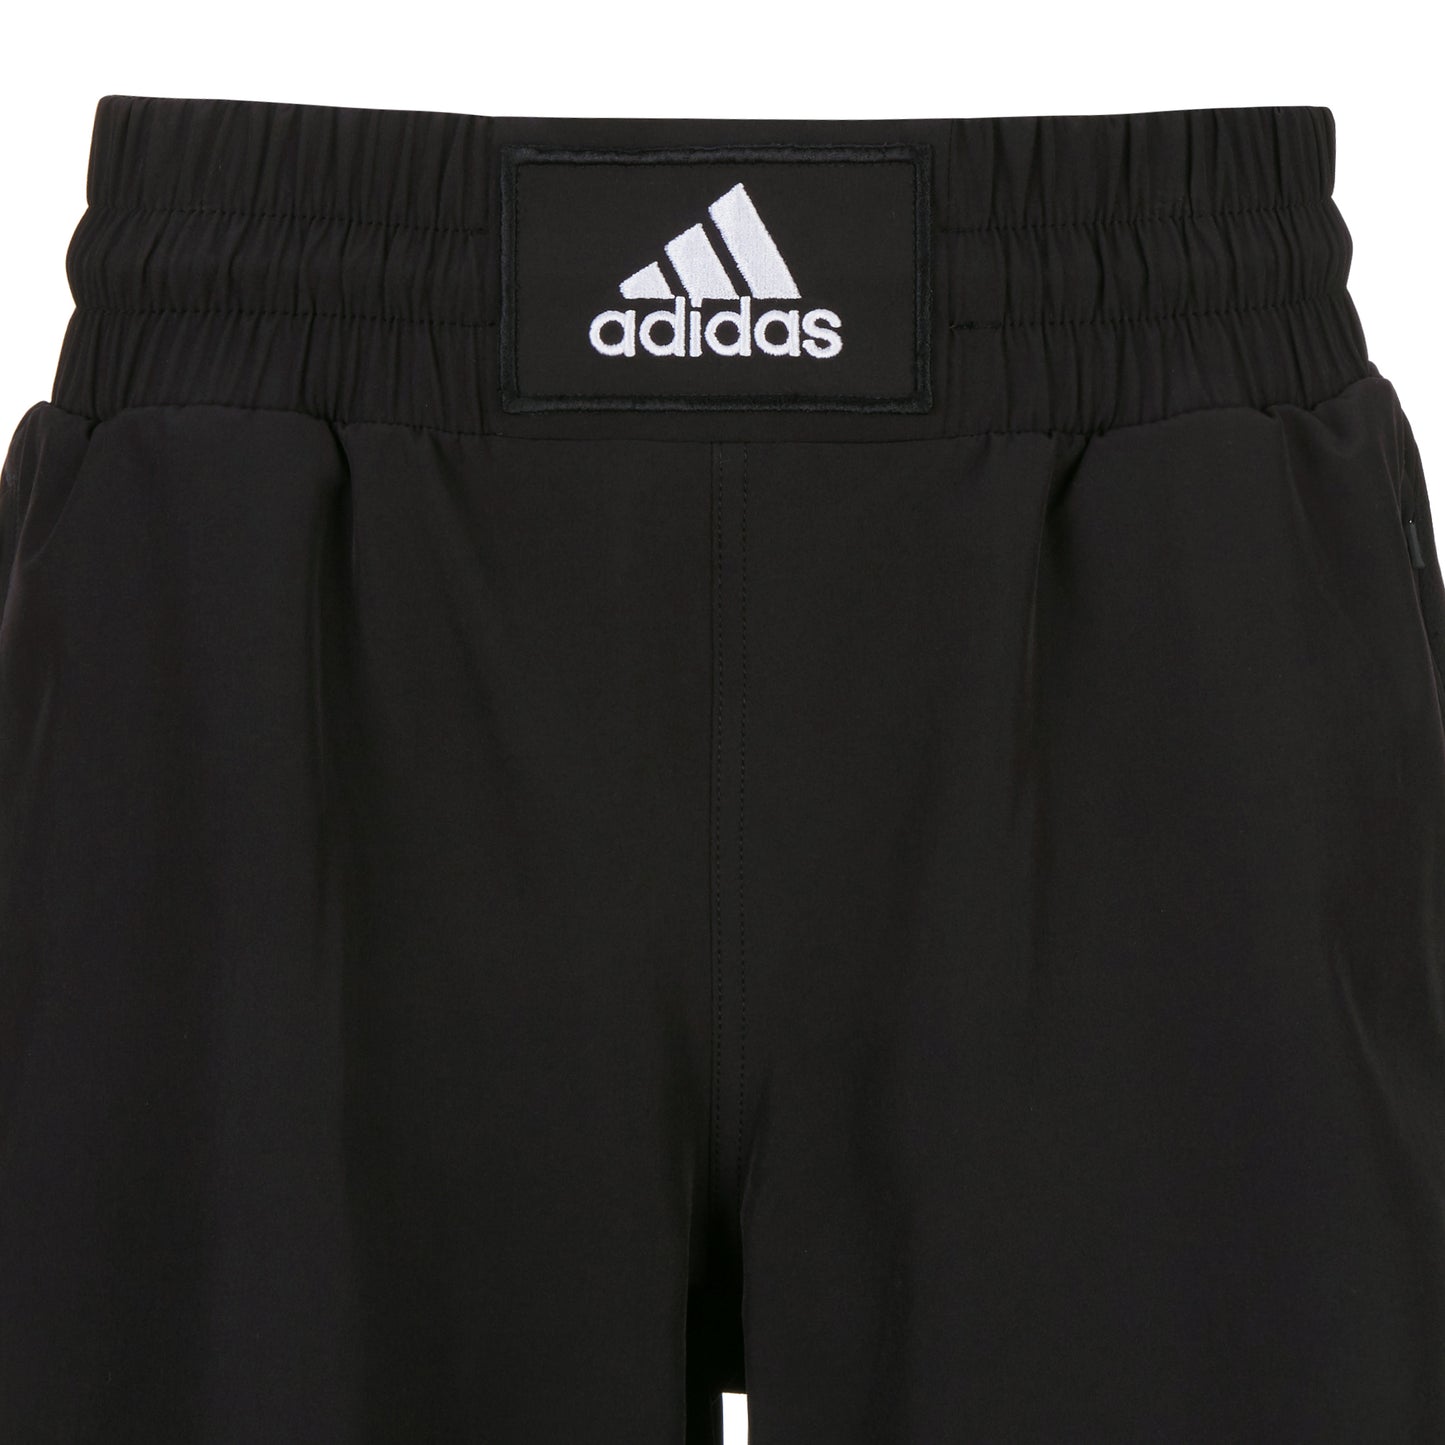 Bxwtsh01 Adidas Boxwear Tech Shorts Black 03